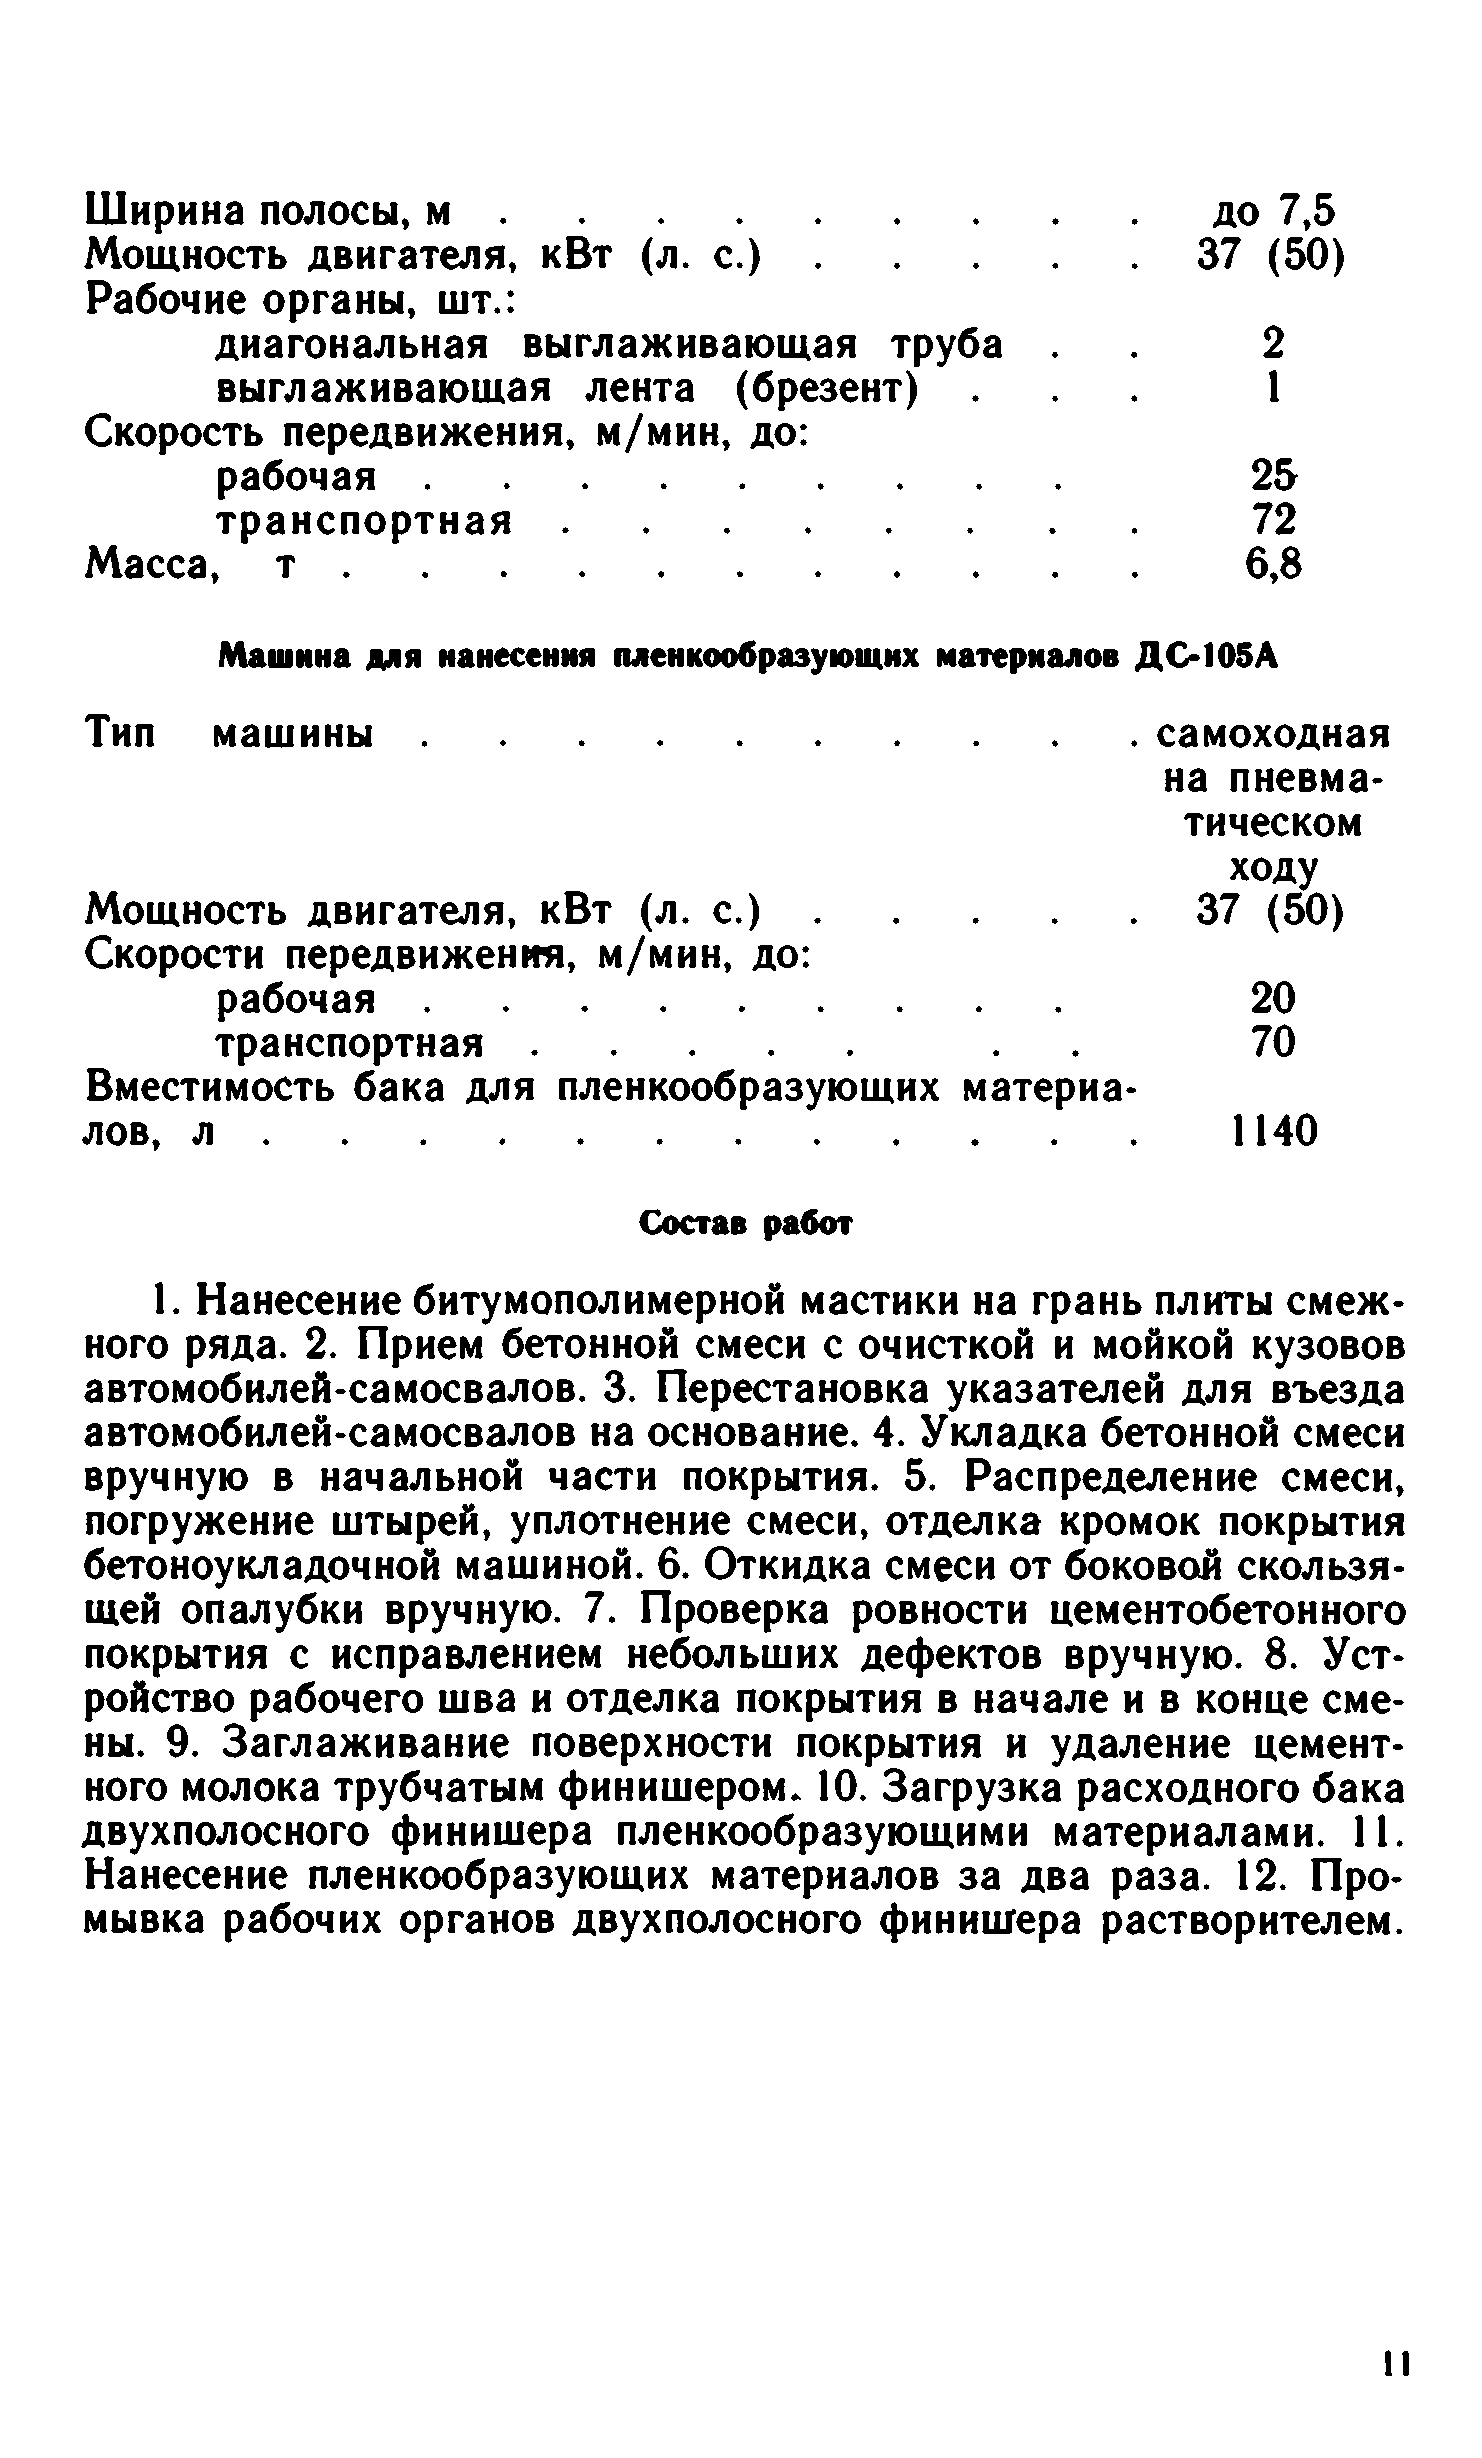 ВНиР В4-1